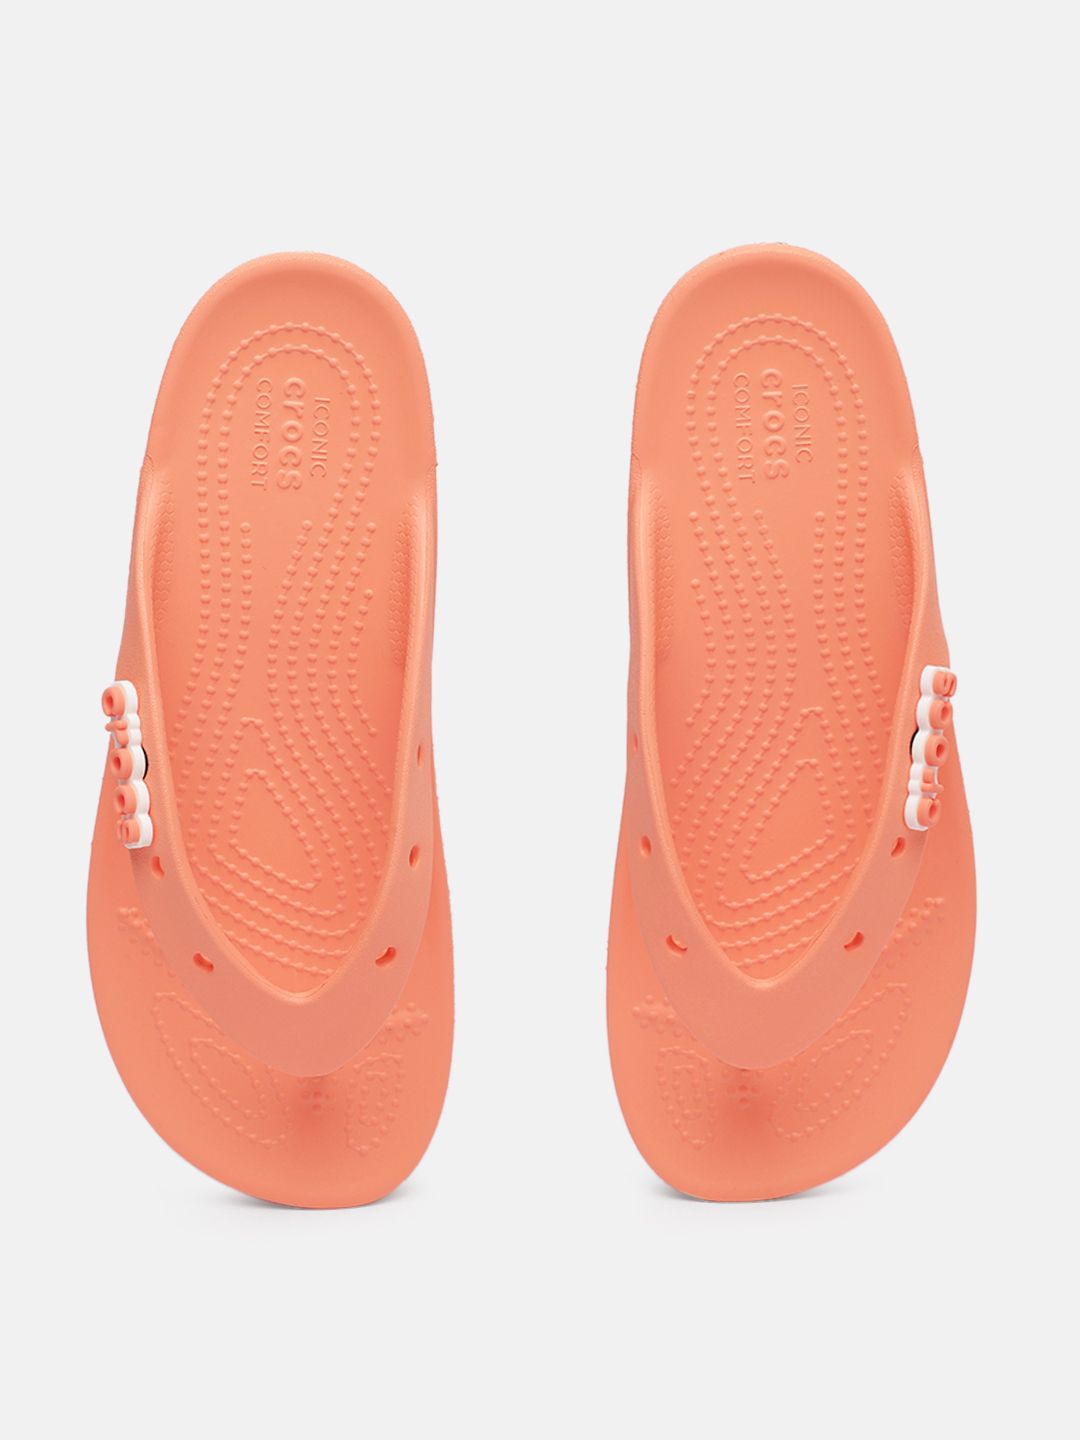 Crocs Women Peach-Coloured Croslite Thong Flip-Flops Price in India